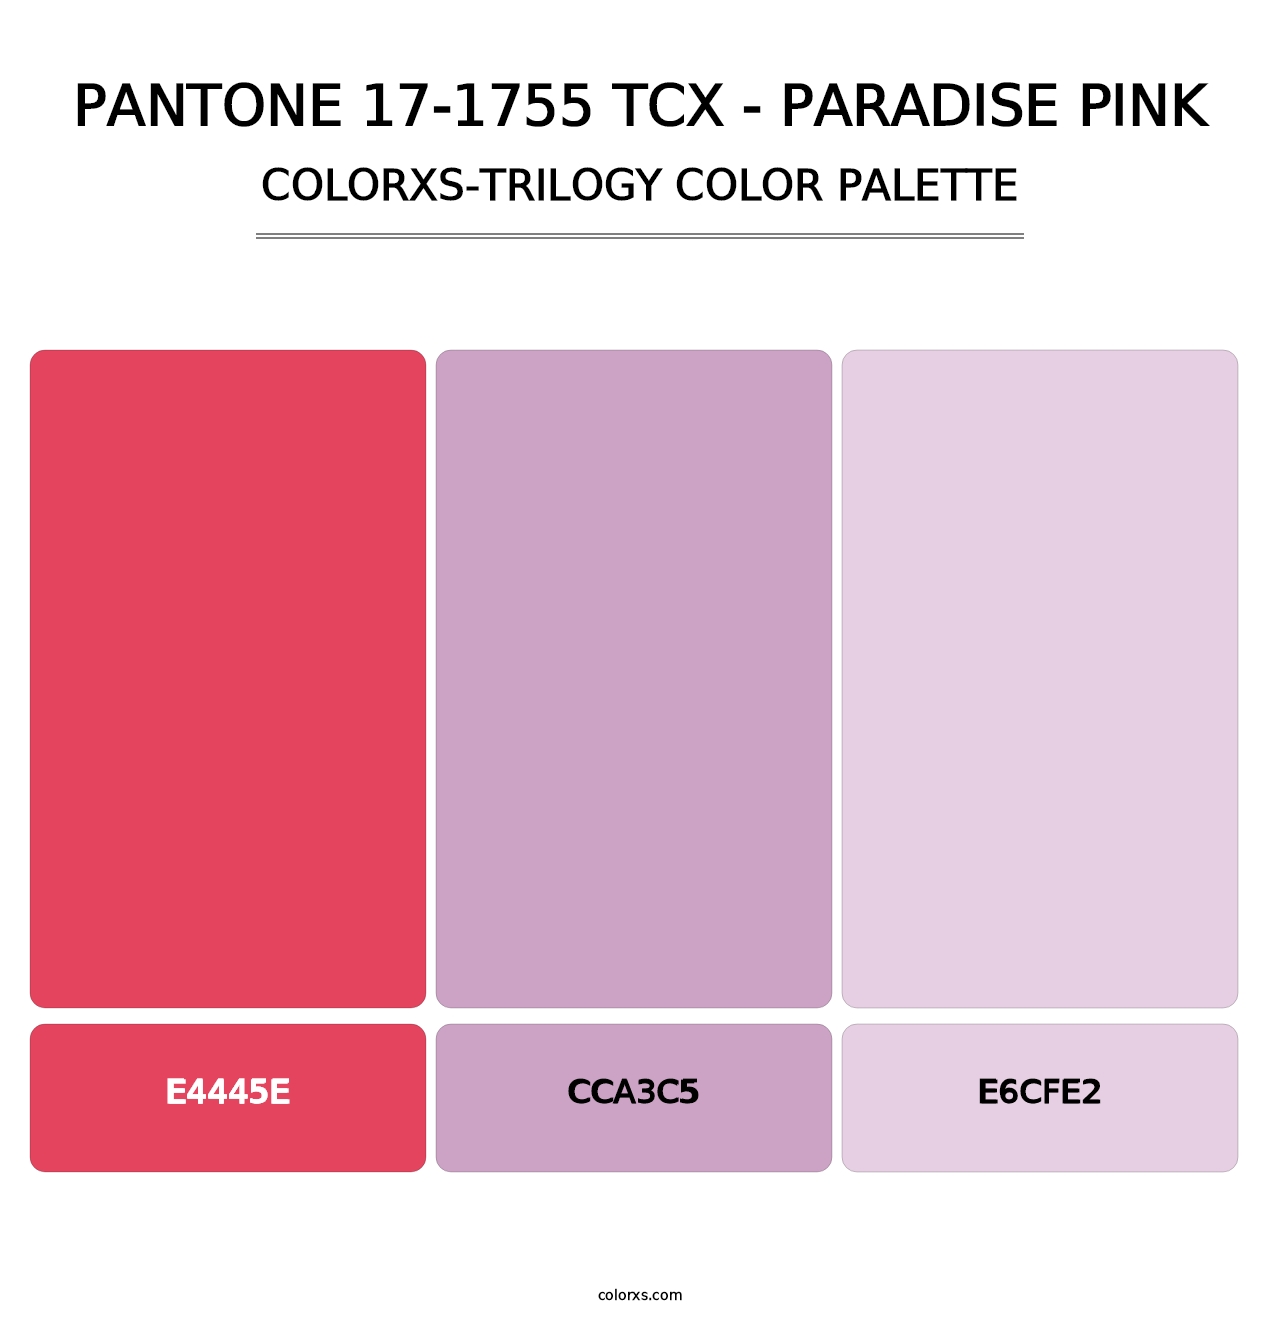 PANTONE 17-1755 TCX - Paradise Pink - Colorxs Trilogy Palette